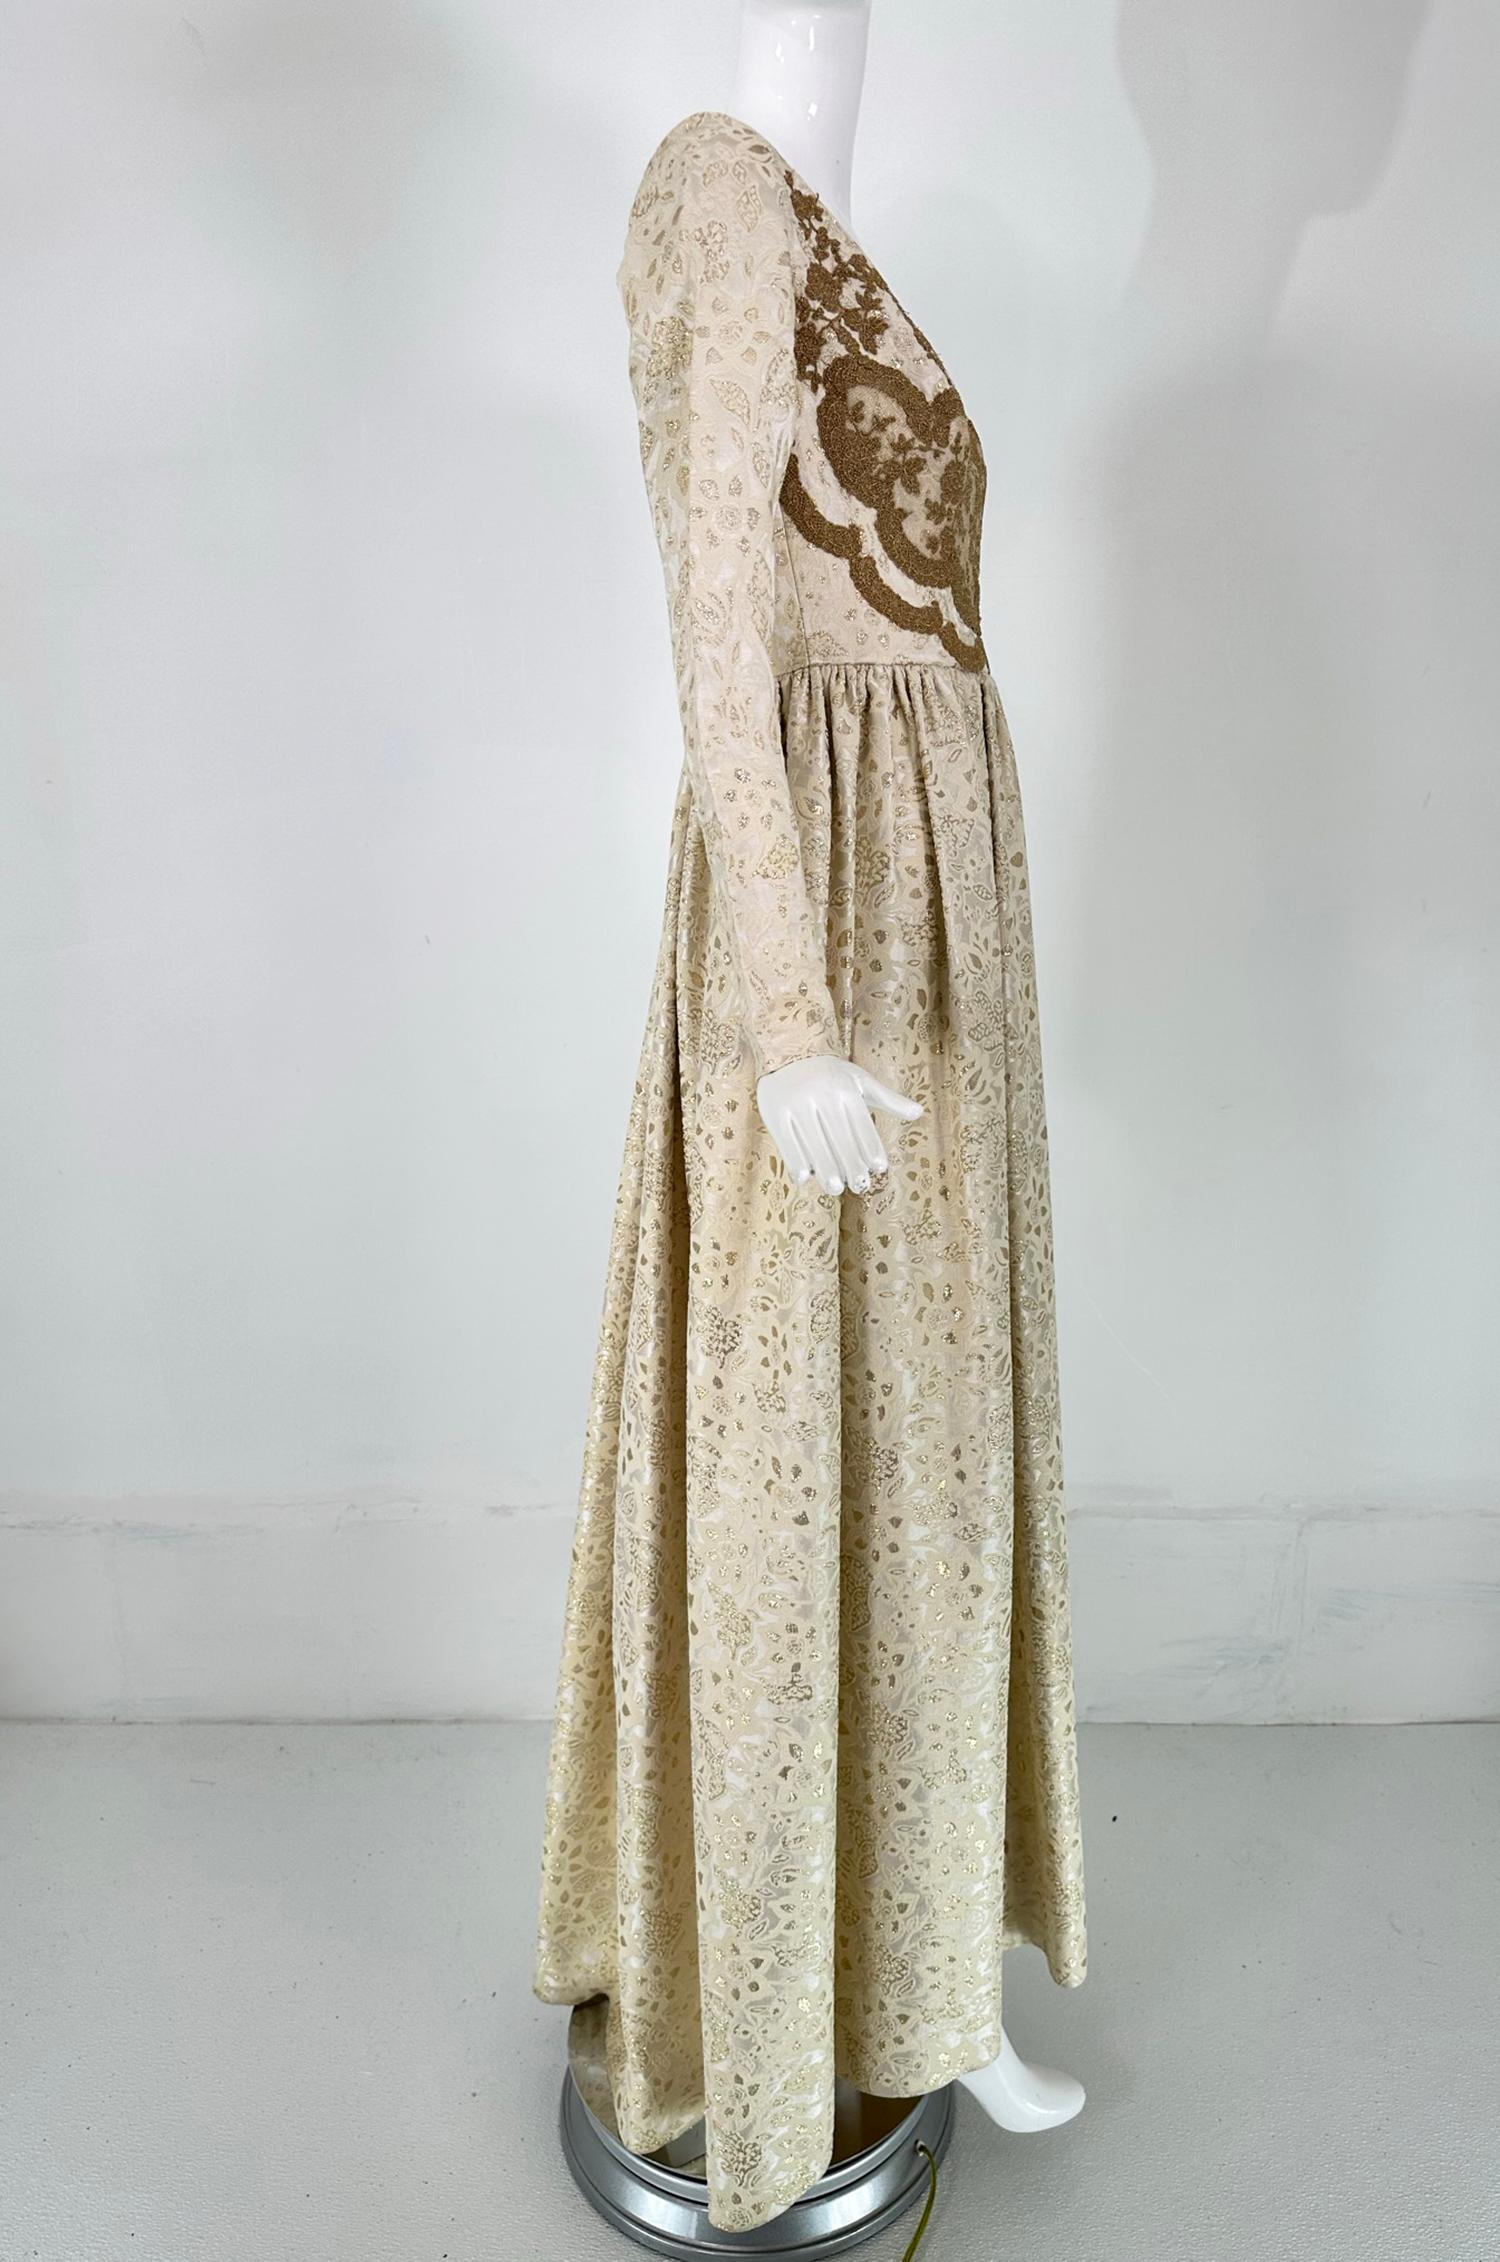 Women's Galitizne Couture Renaissance Style Gown in Cream & Gold Metallic Brocade 1970s For Sale